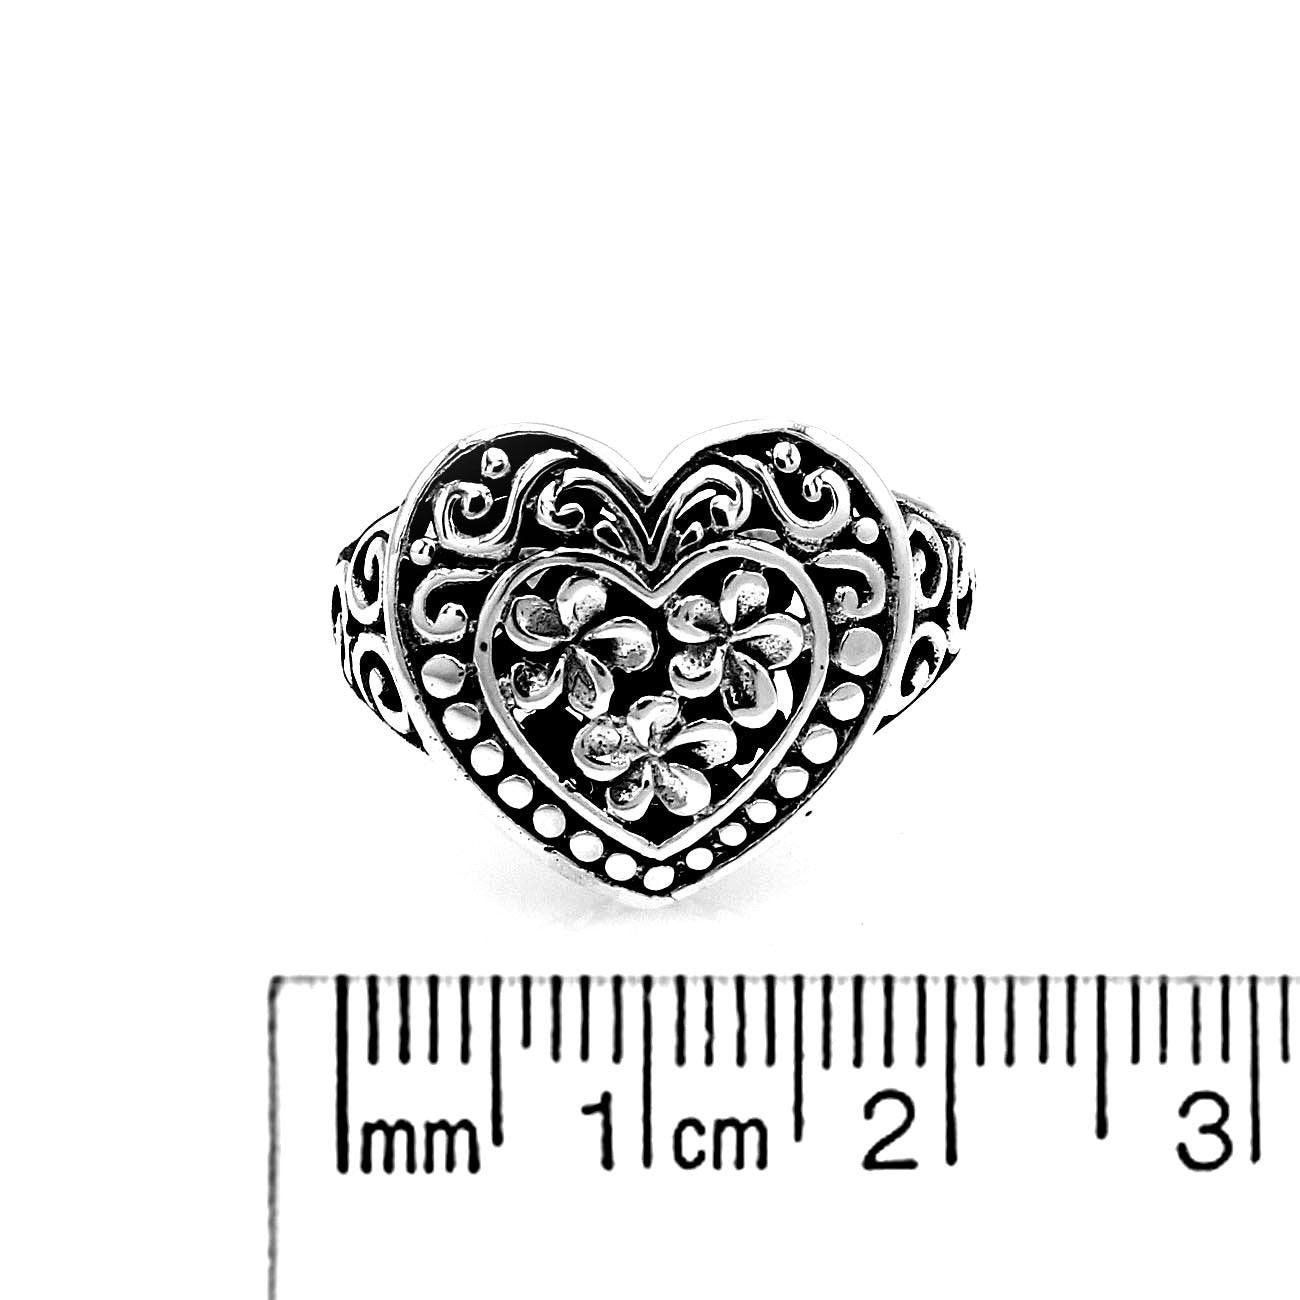 Designer Handmade BALI HEART Ring in 925 Sterling Silver - Size L , M , N , O , P , Q - Inspiring Jewellery